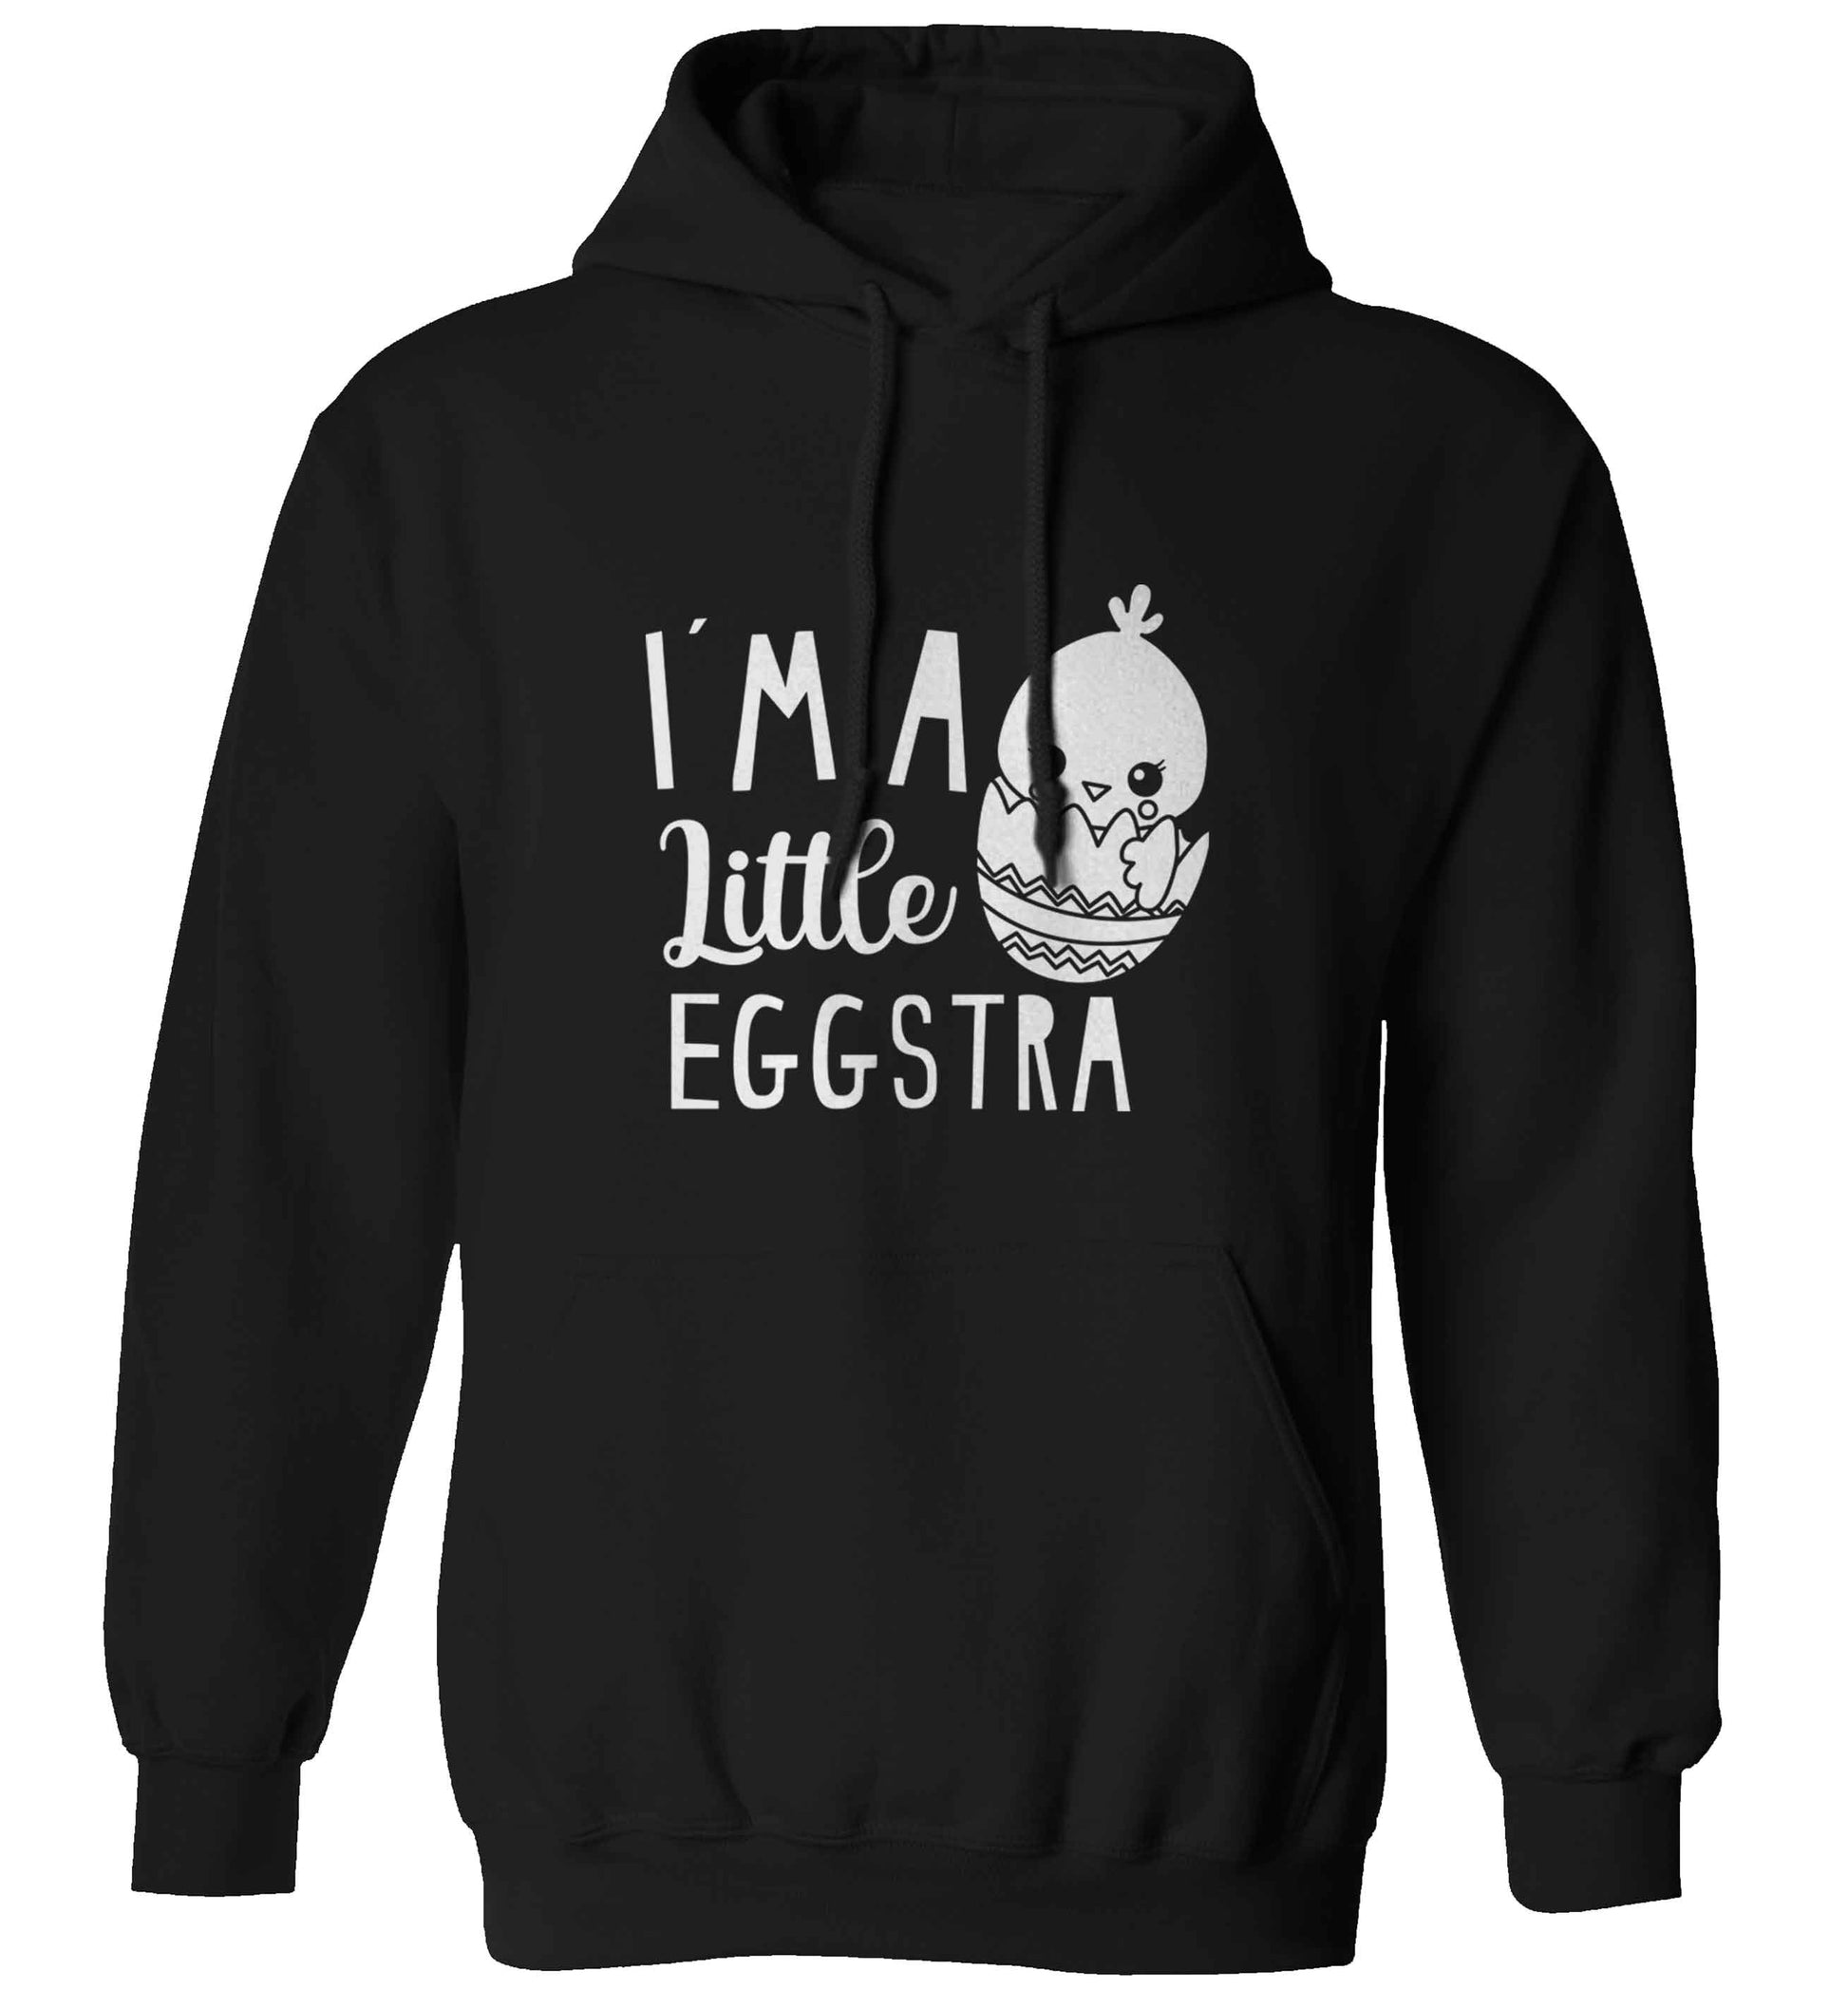 I'm a little eggstra adults unisex black hoodie 2XL